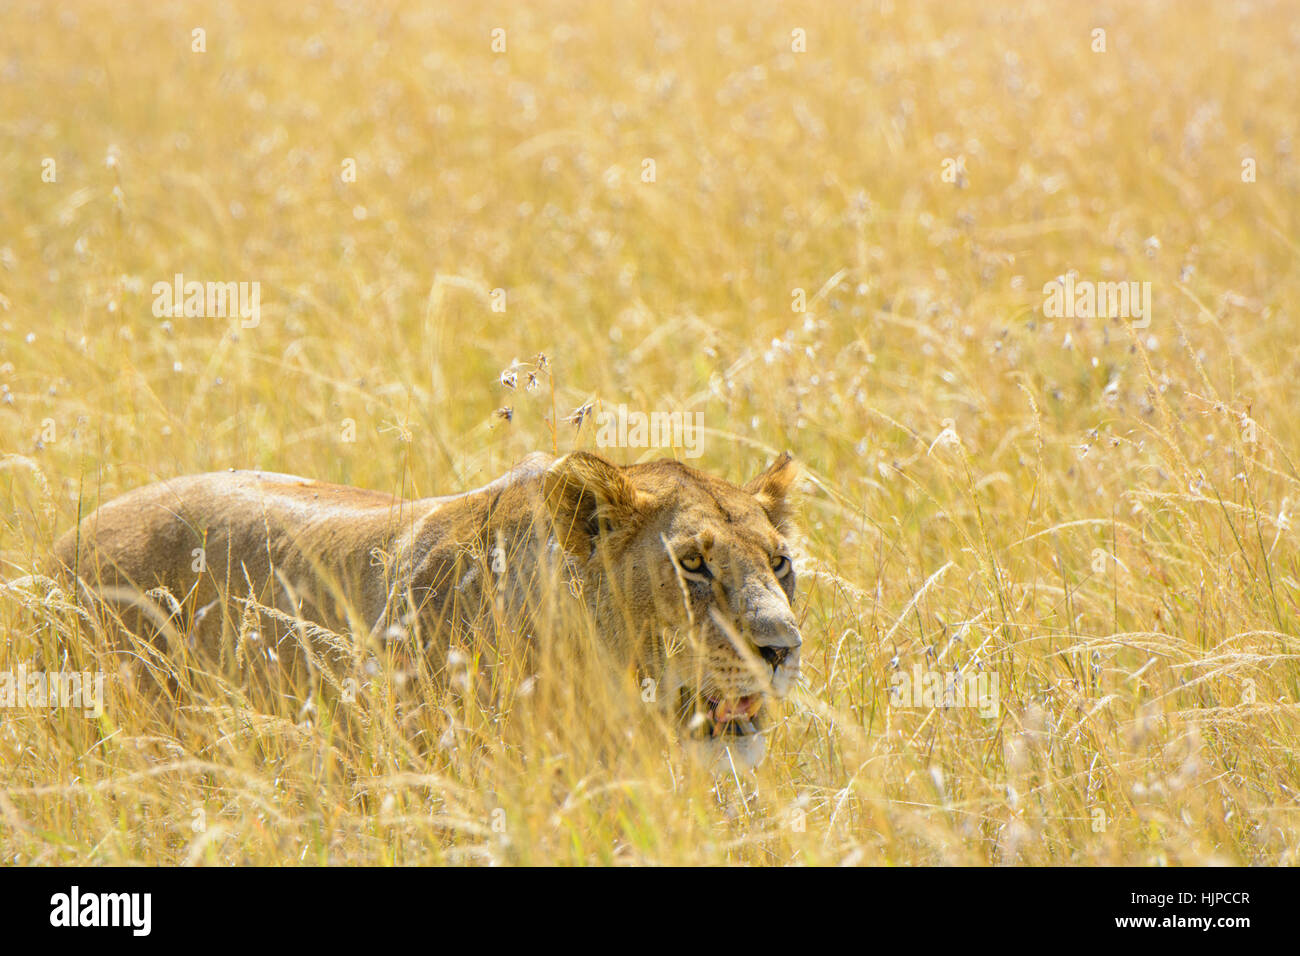 Adult wild African Lioness, Panthera leo, stalking prey camouflaged in long grass, Masai Mara, Kenya, Africa, Lioness hunting behavior Stock Photo